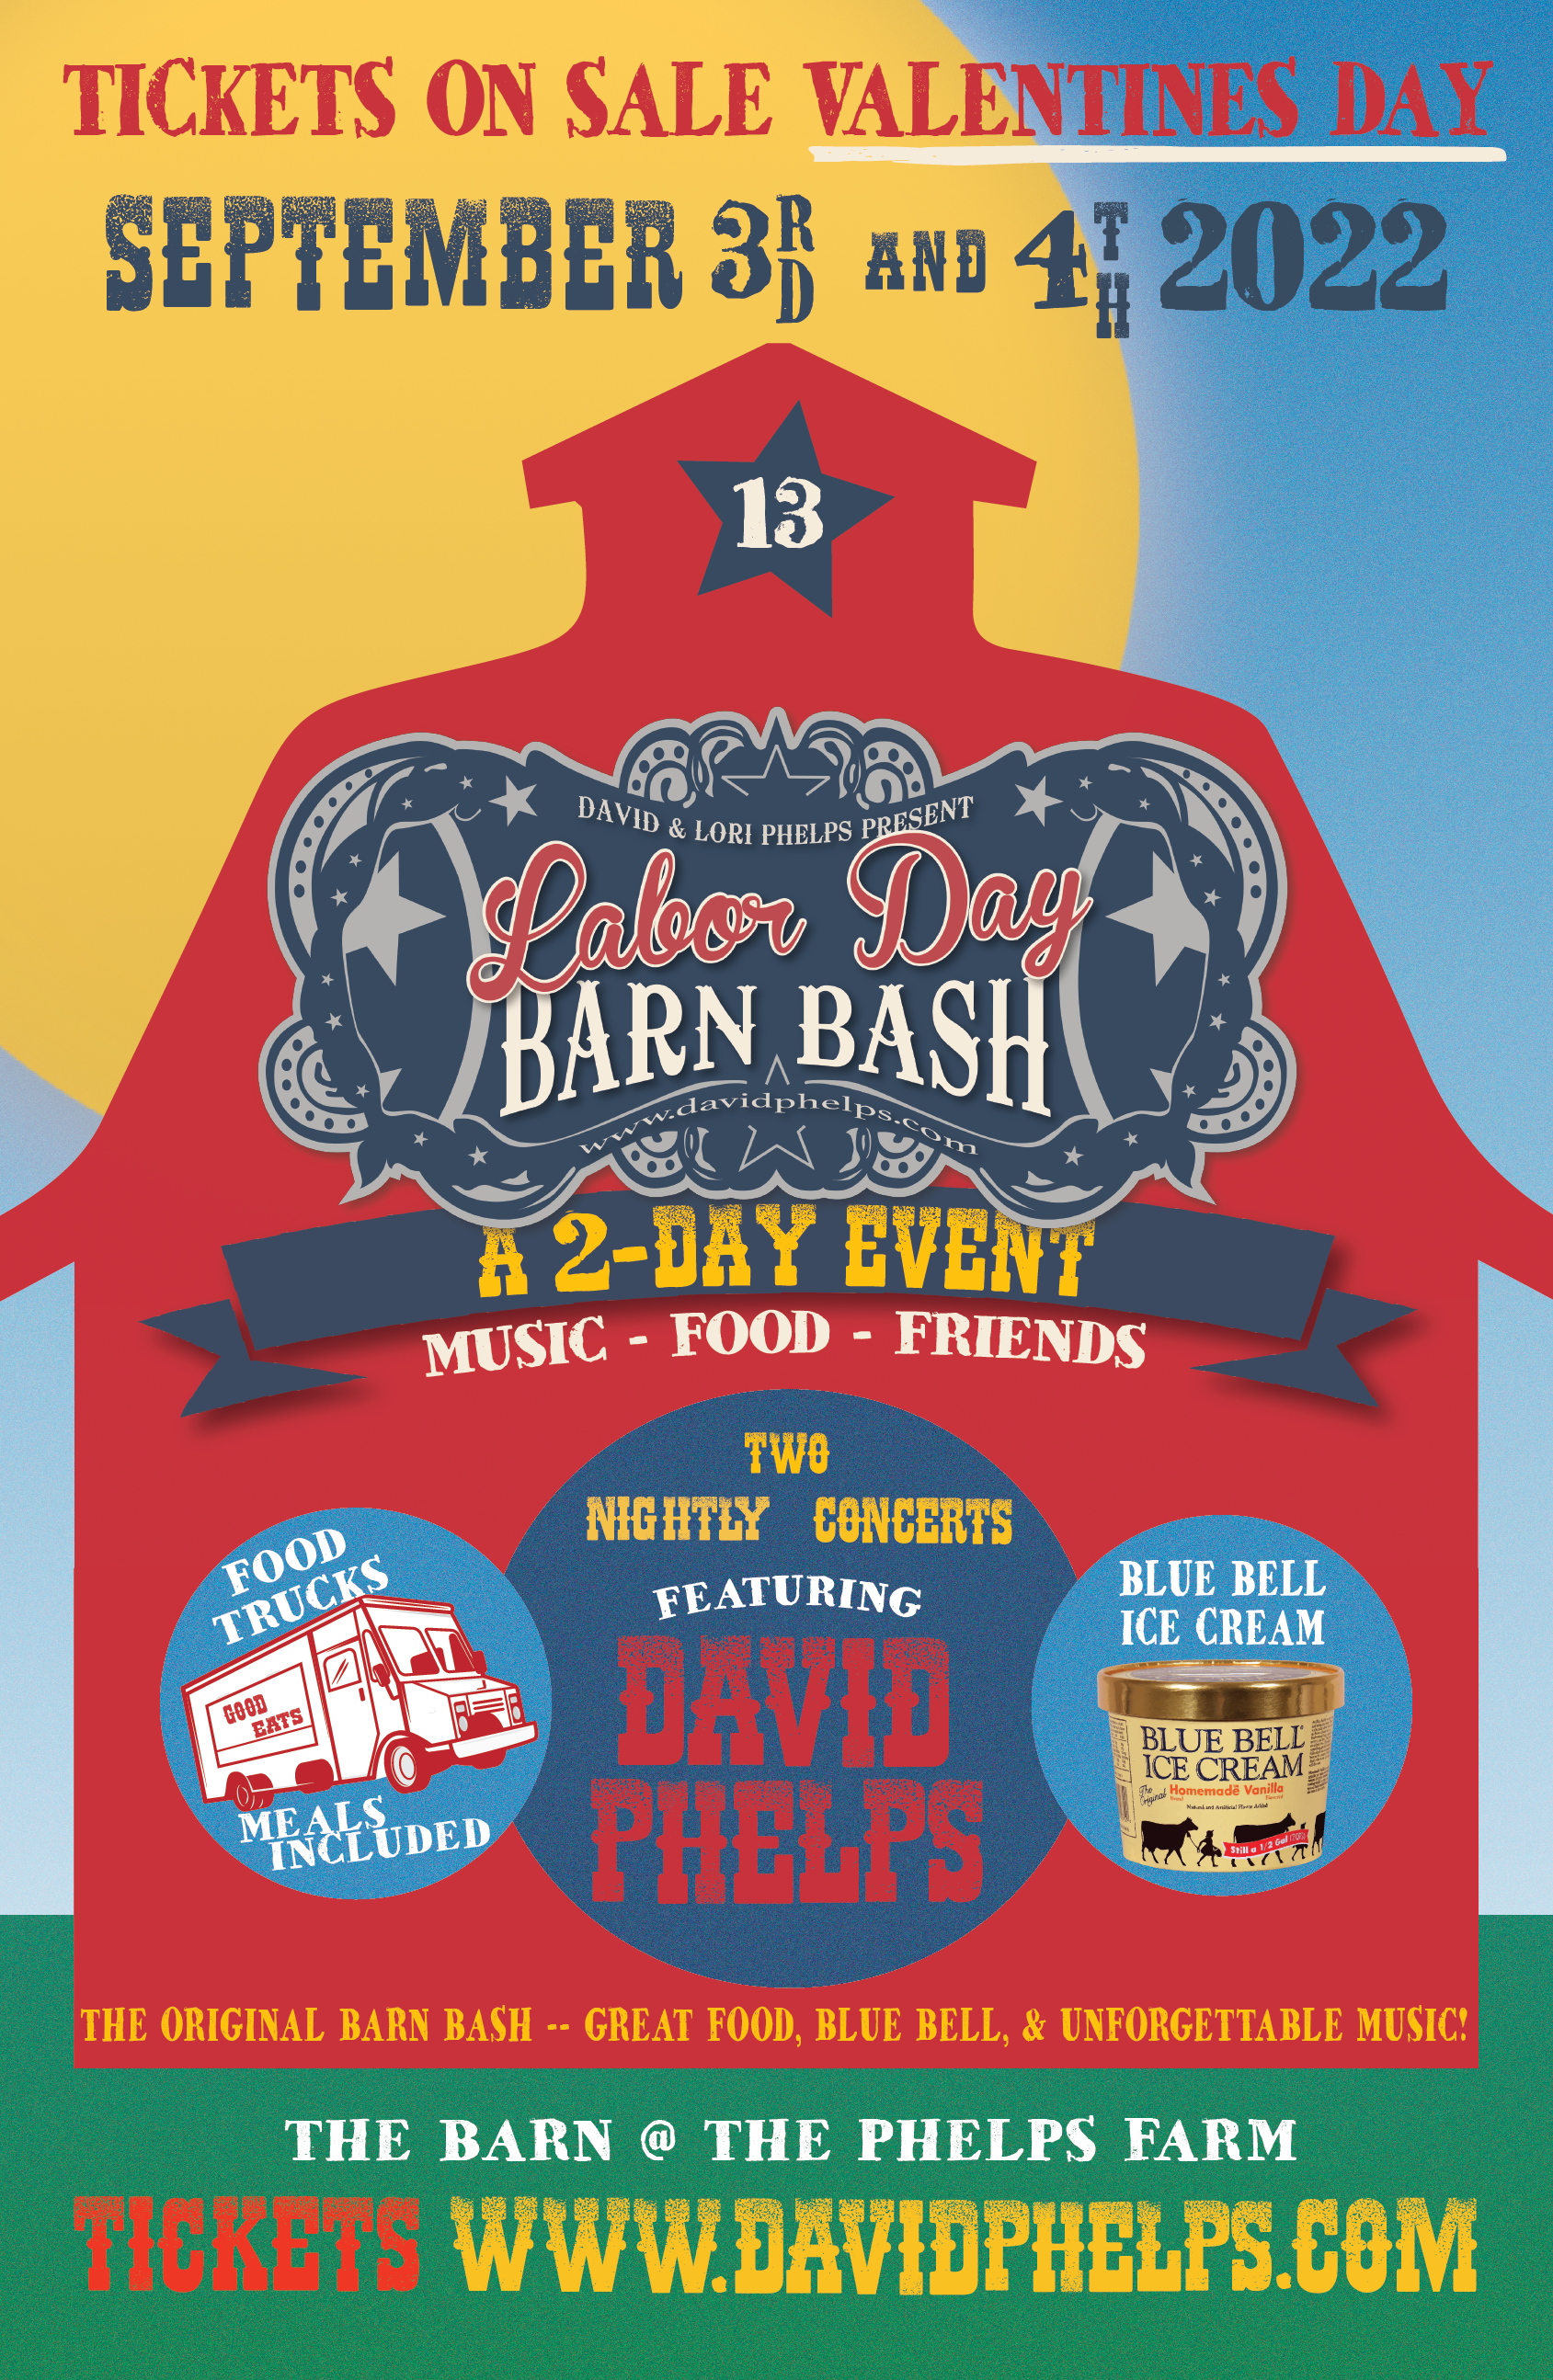 Labor Day Barn Bash 2022 Tickets On Sale Valentine’s Day